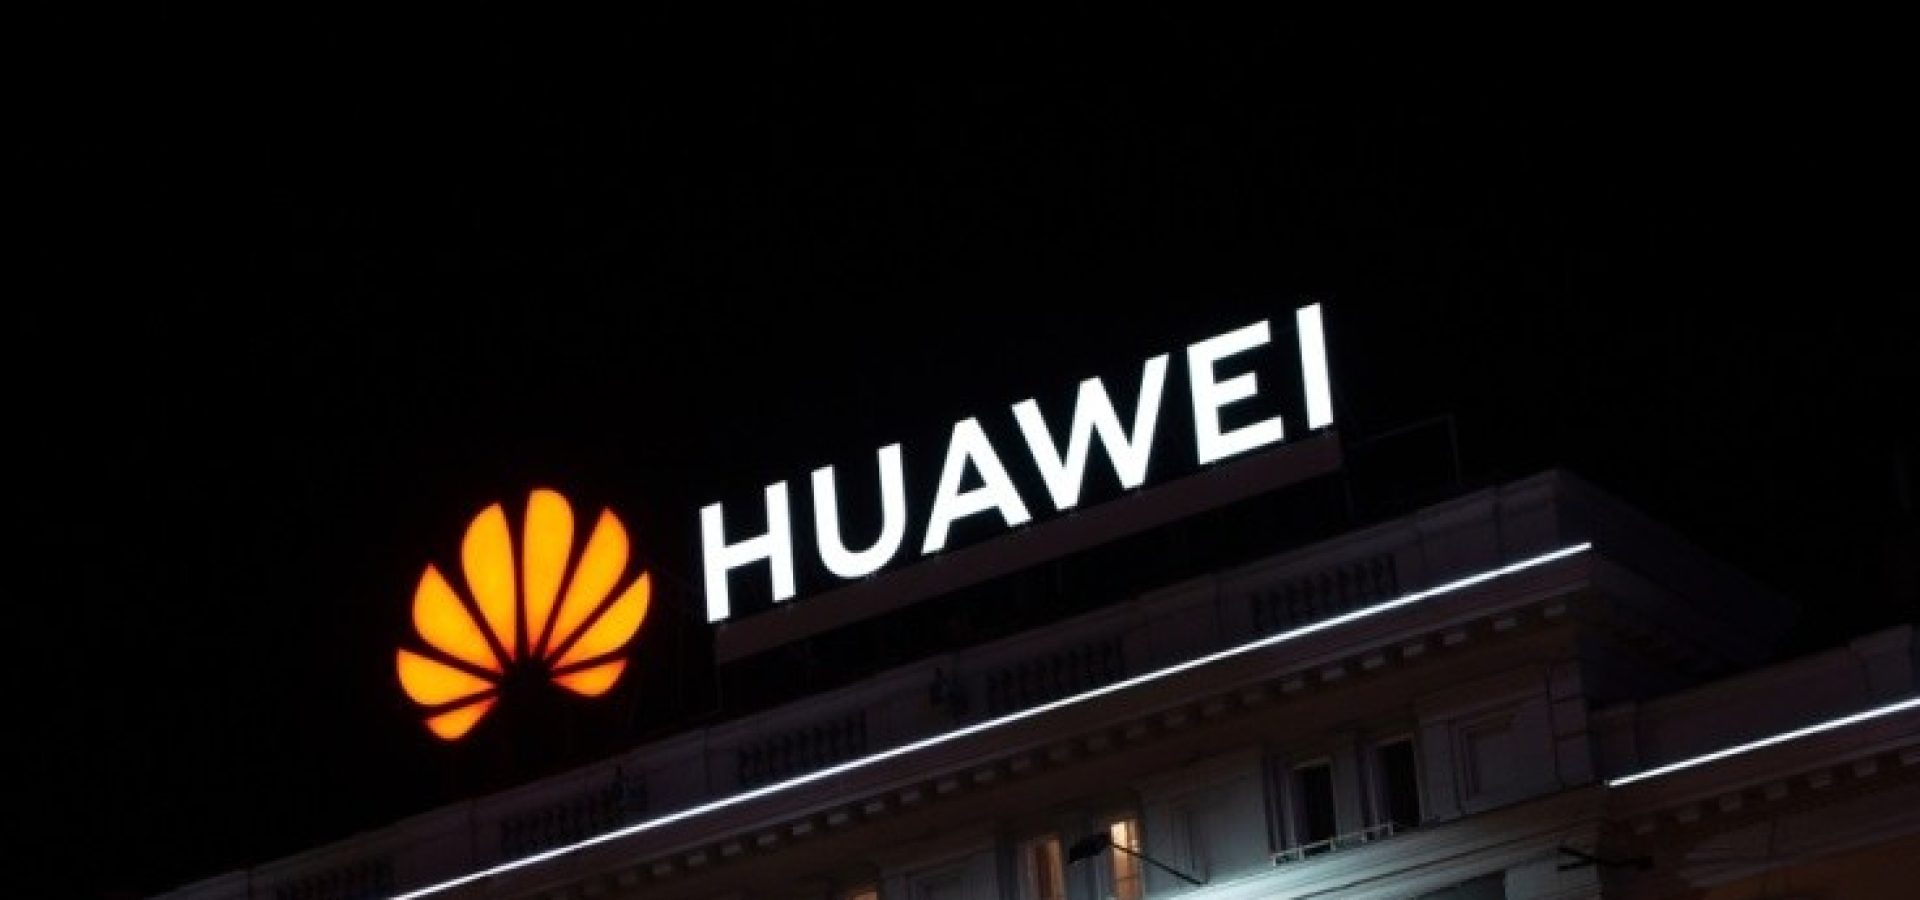 Wibest – Huawei logo and name on dark background.